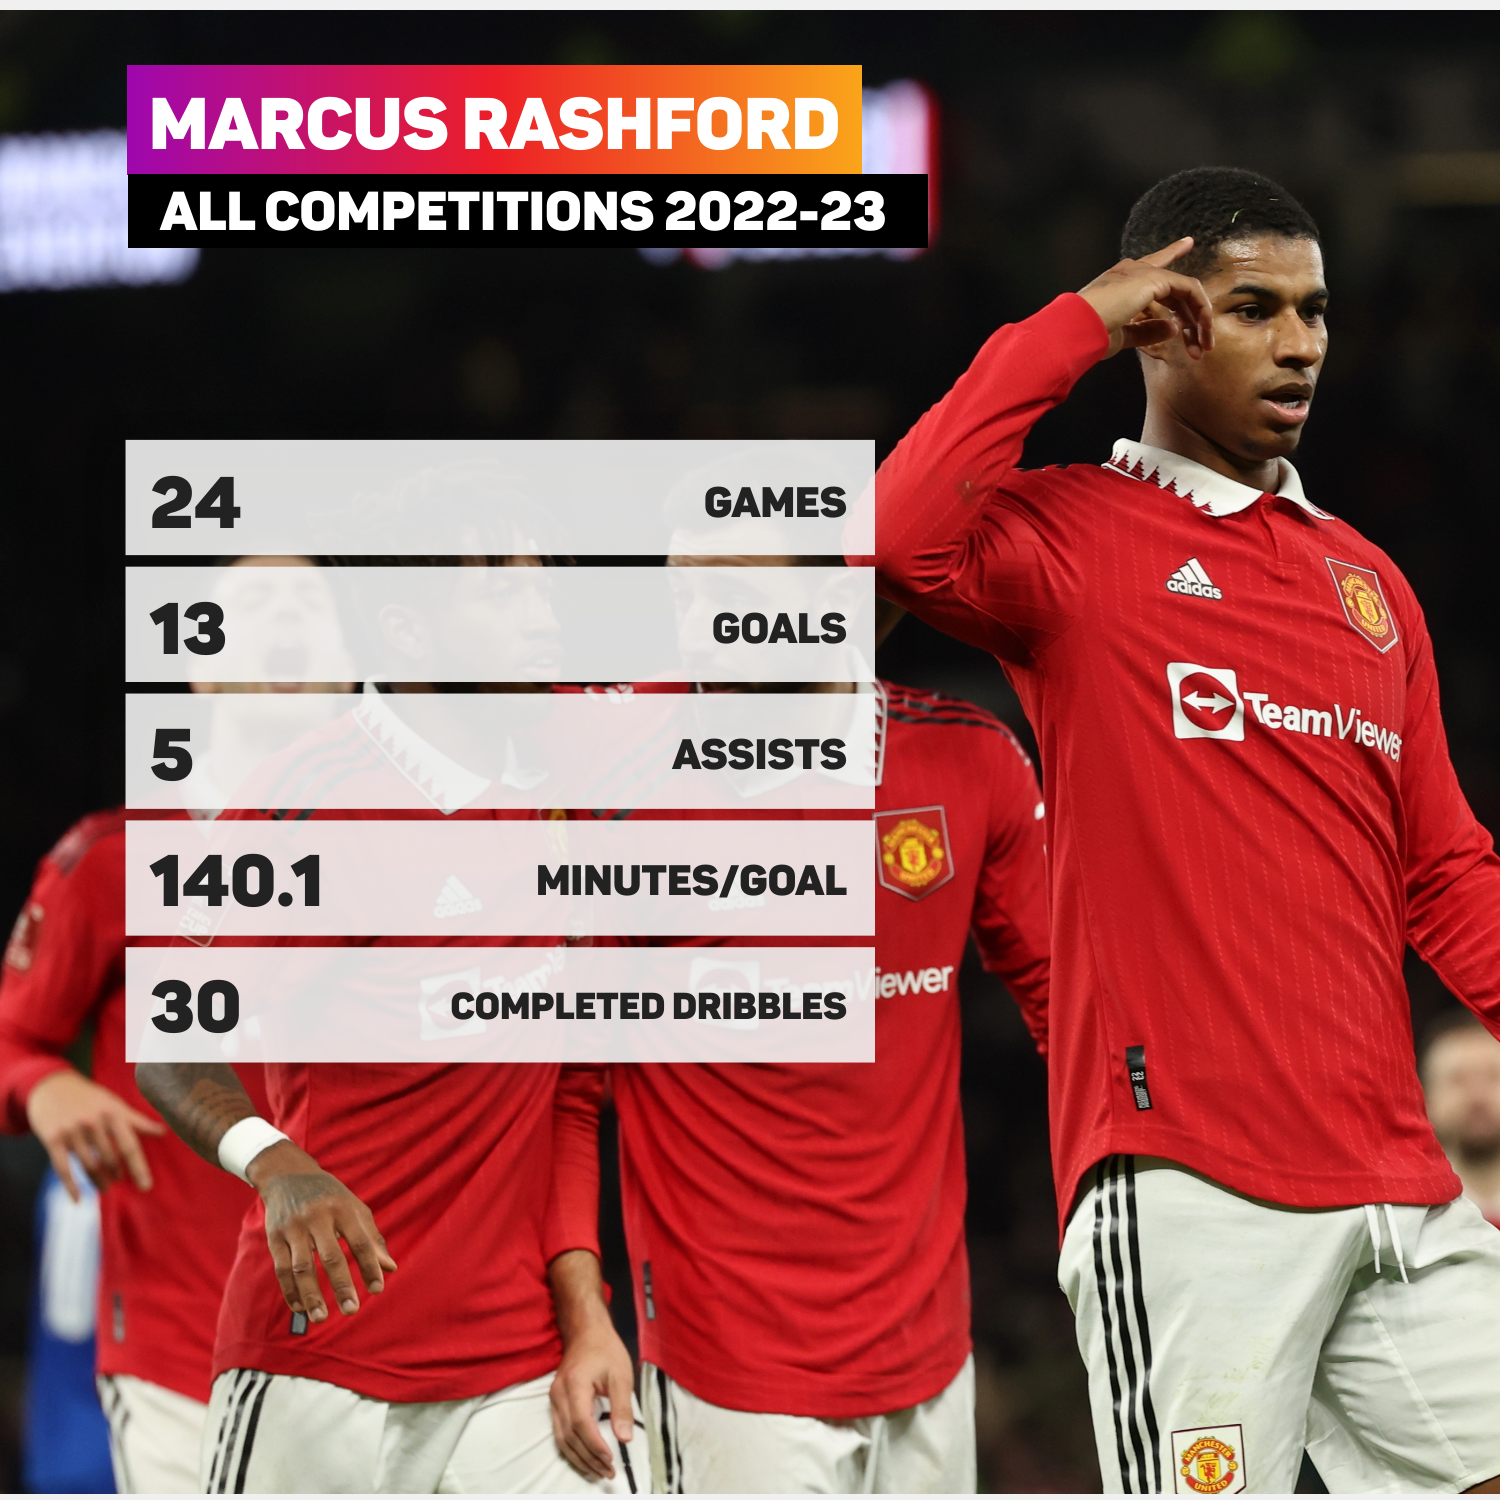 Marcus Rashford has been in brilliant form this season